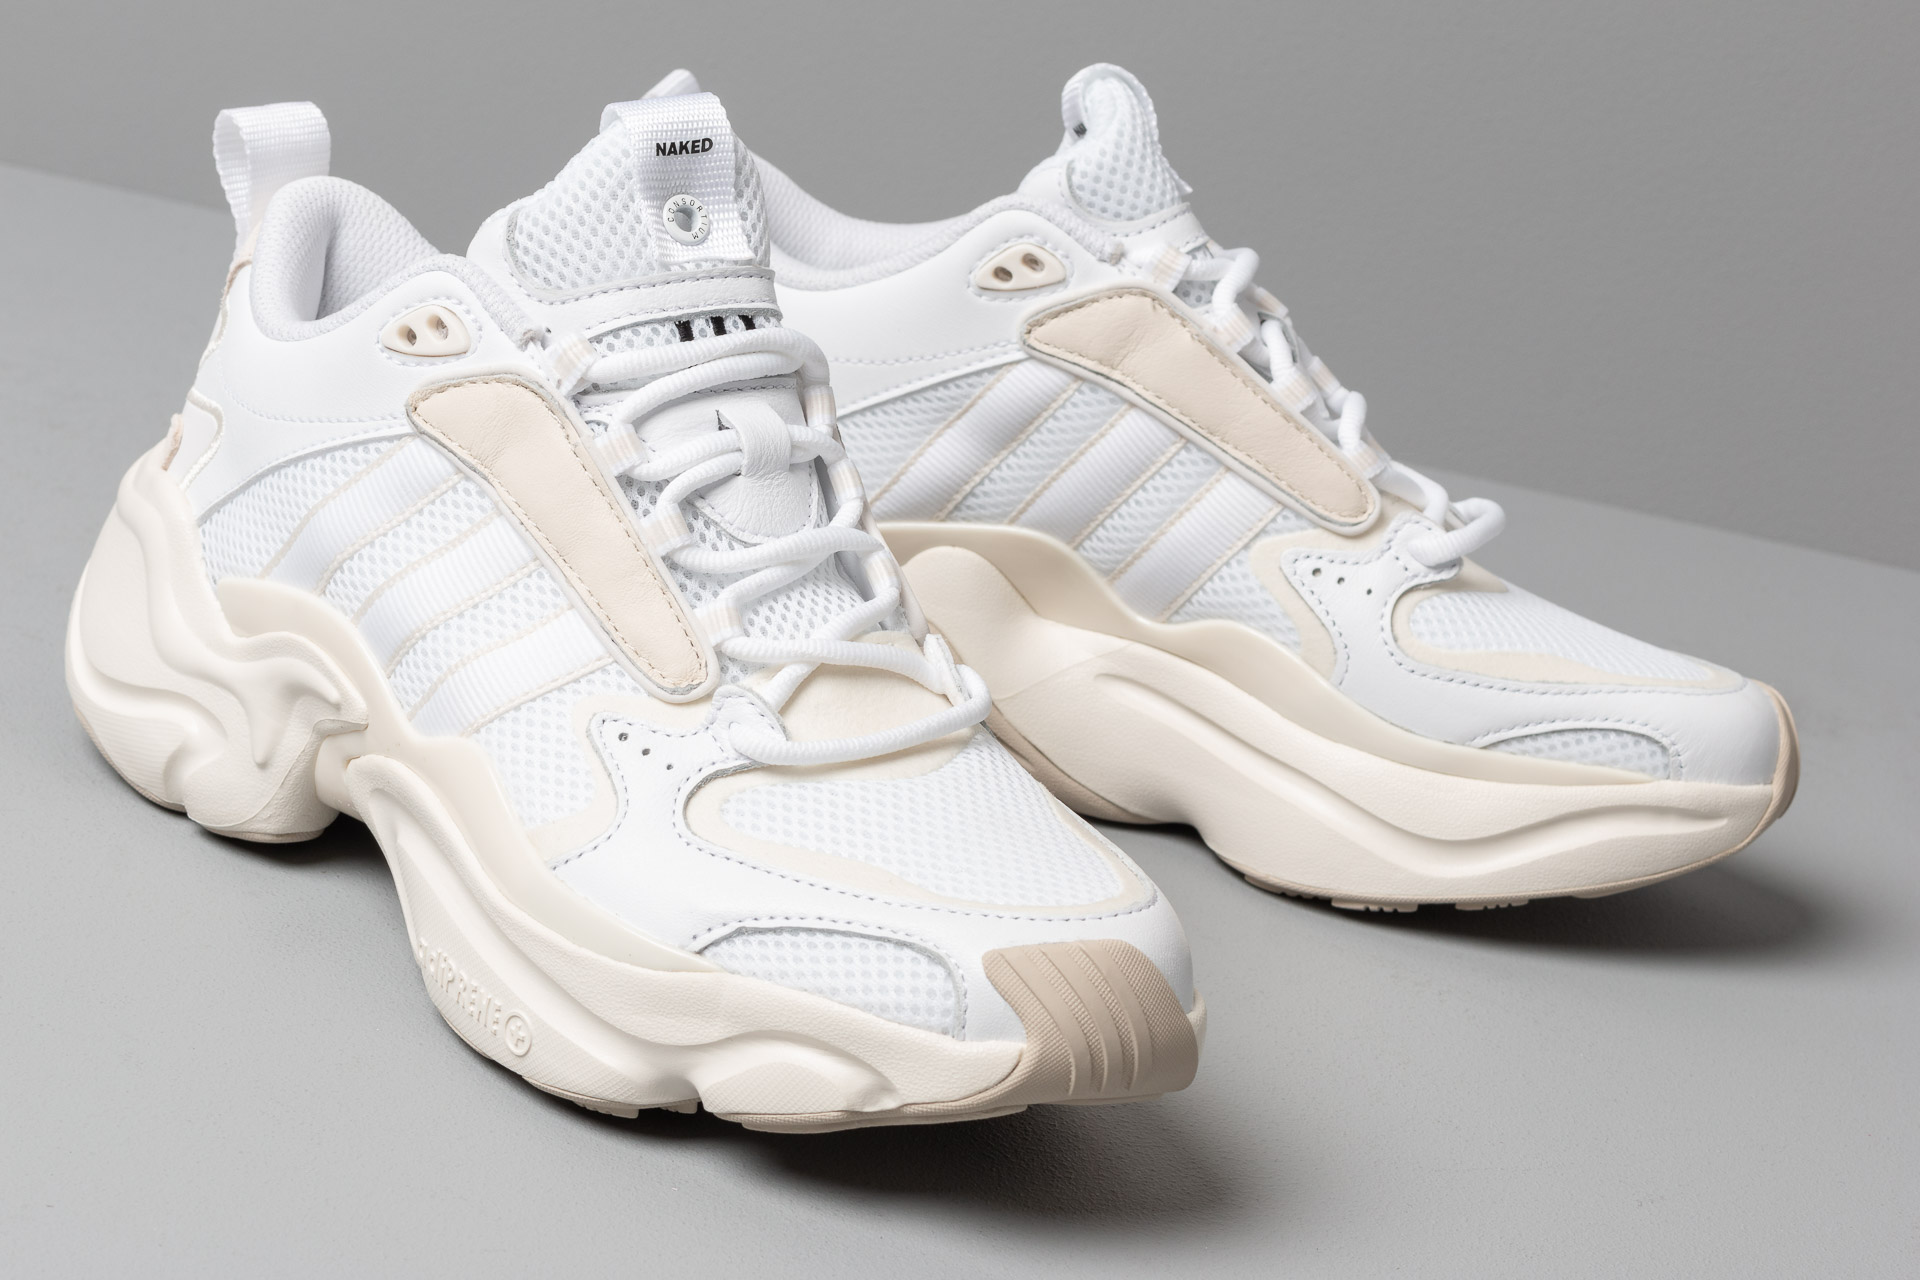 adidas Naked Magmur Runner - G54683 - White / Chalk White/ White - Footshop - Releases